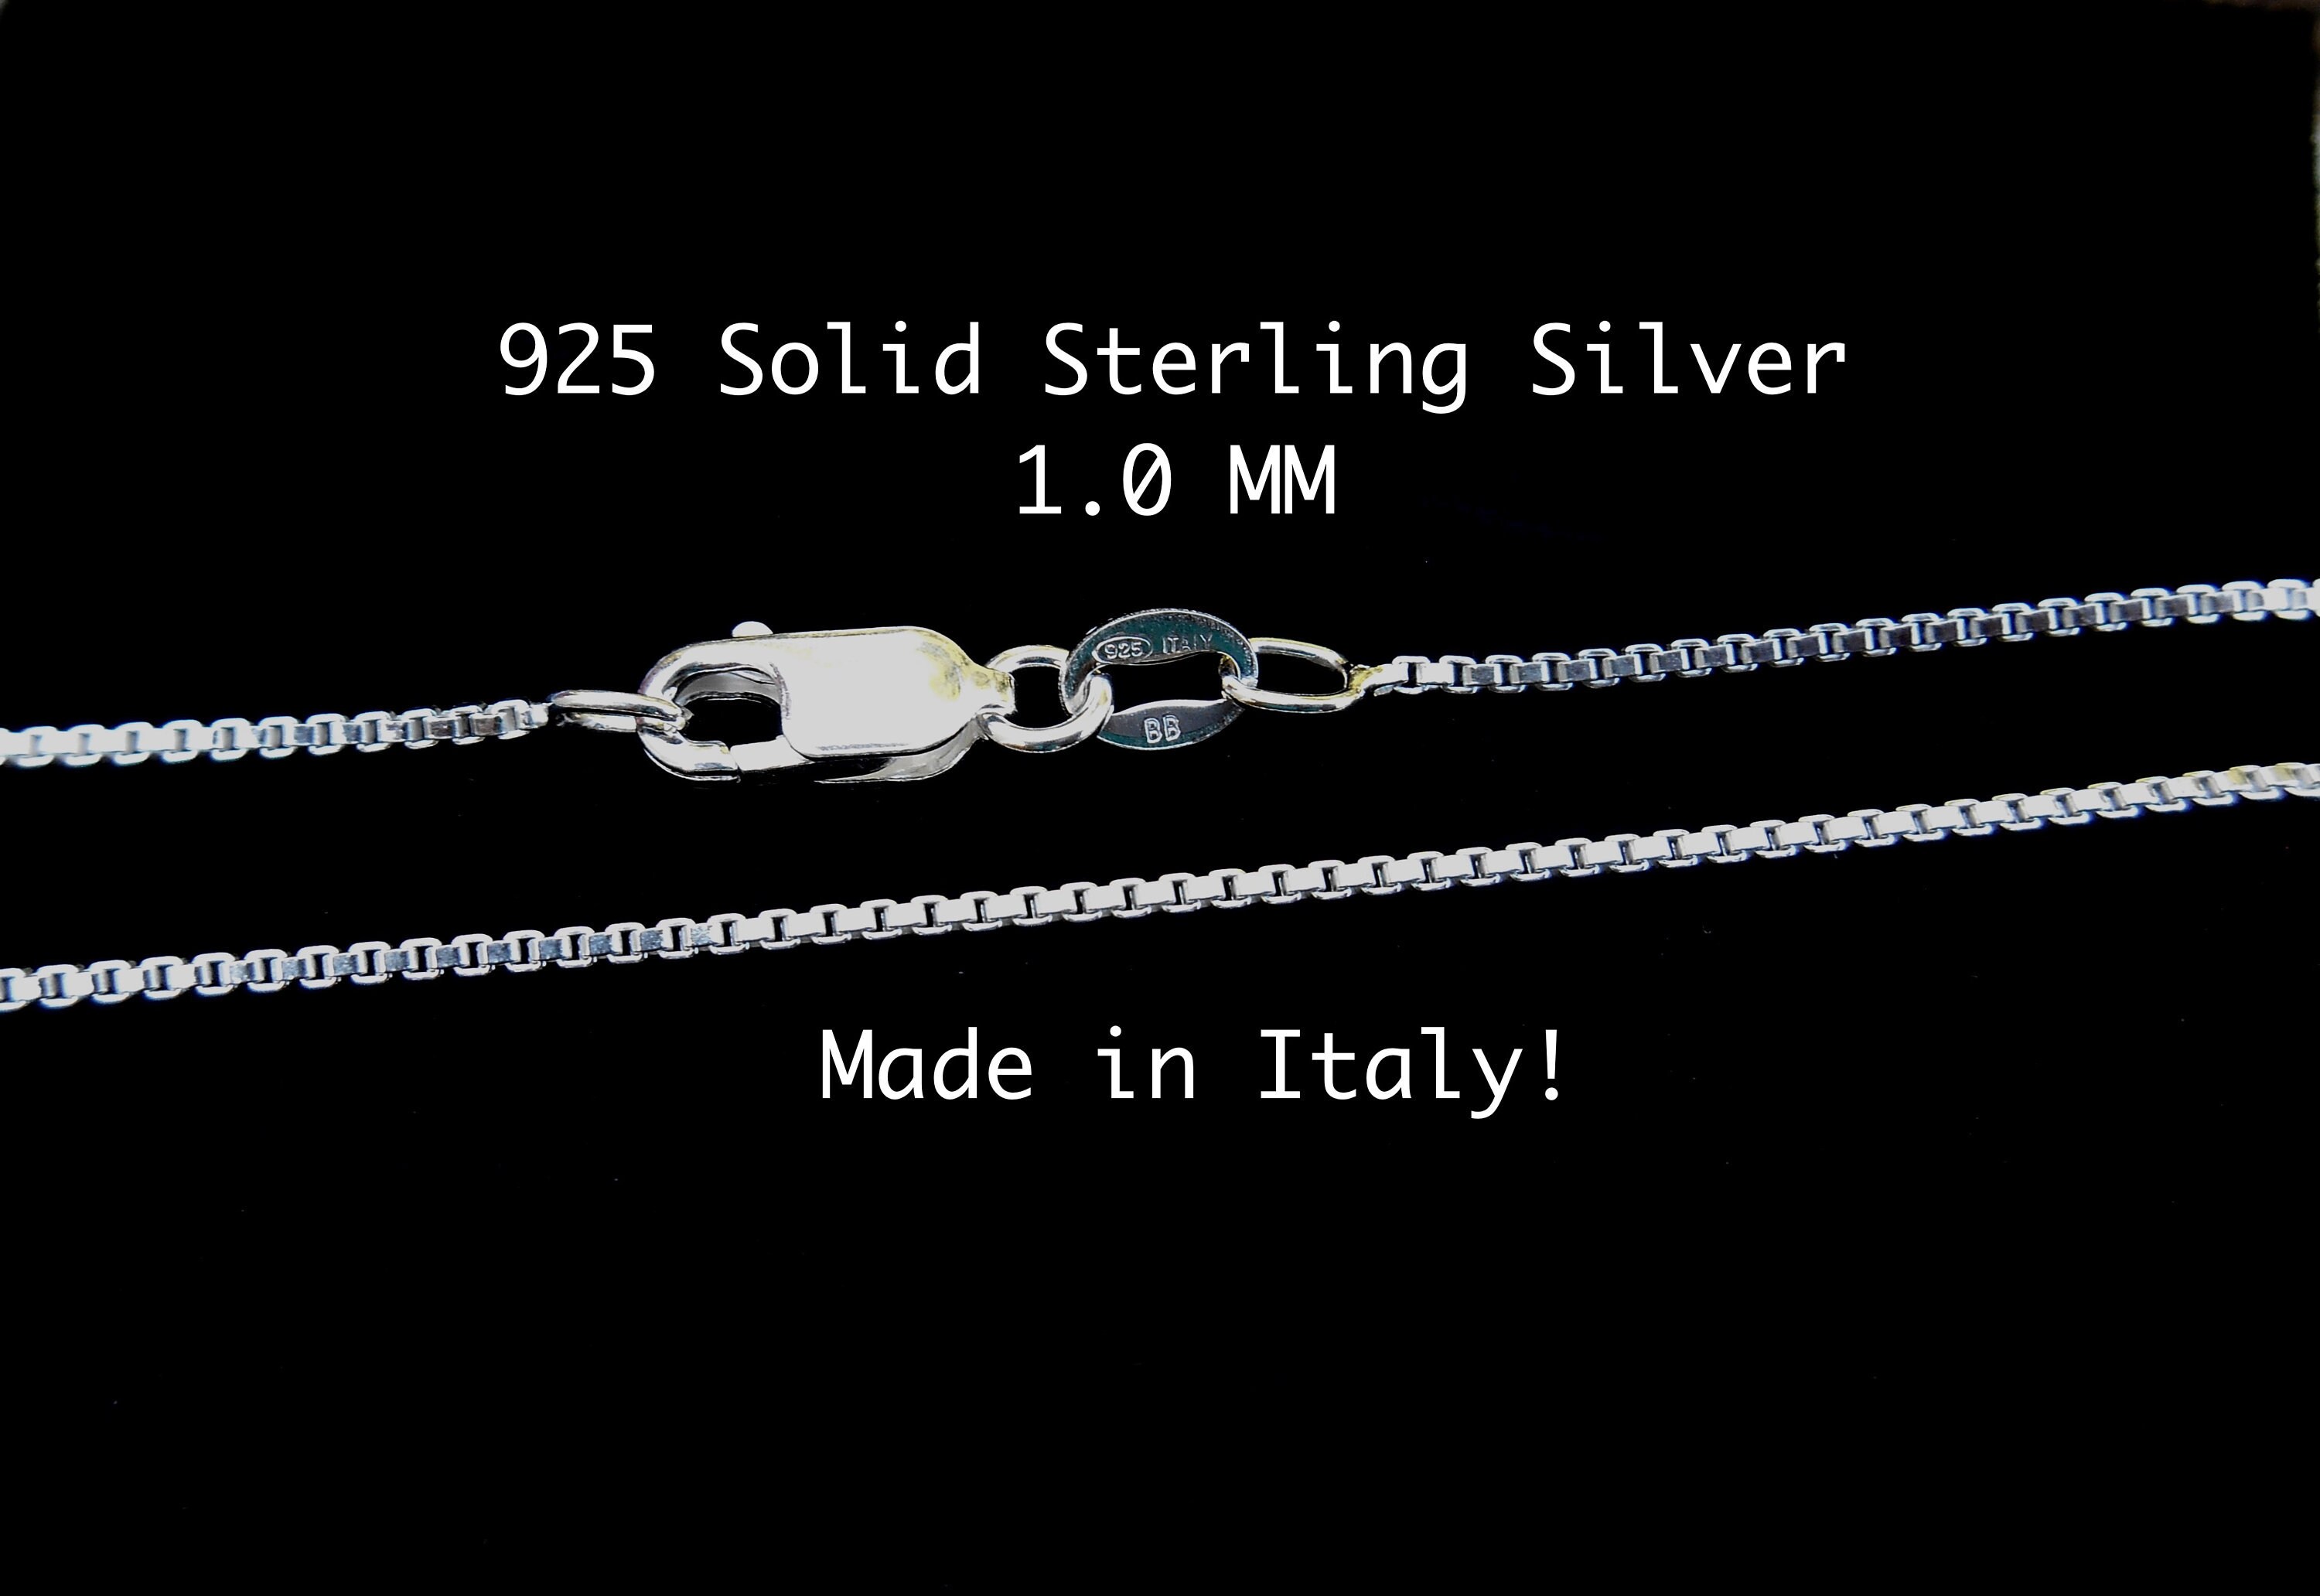 925 Solid Sterling Silver Box Chain, Elegant Dainty Silver Chain